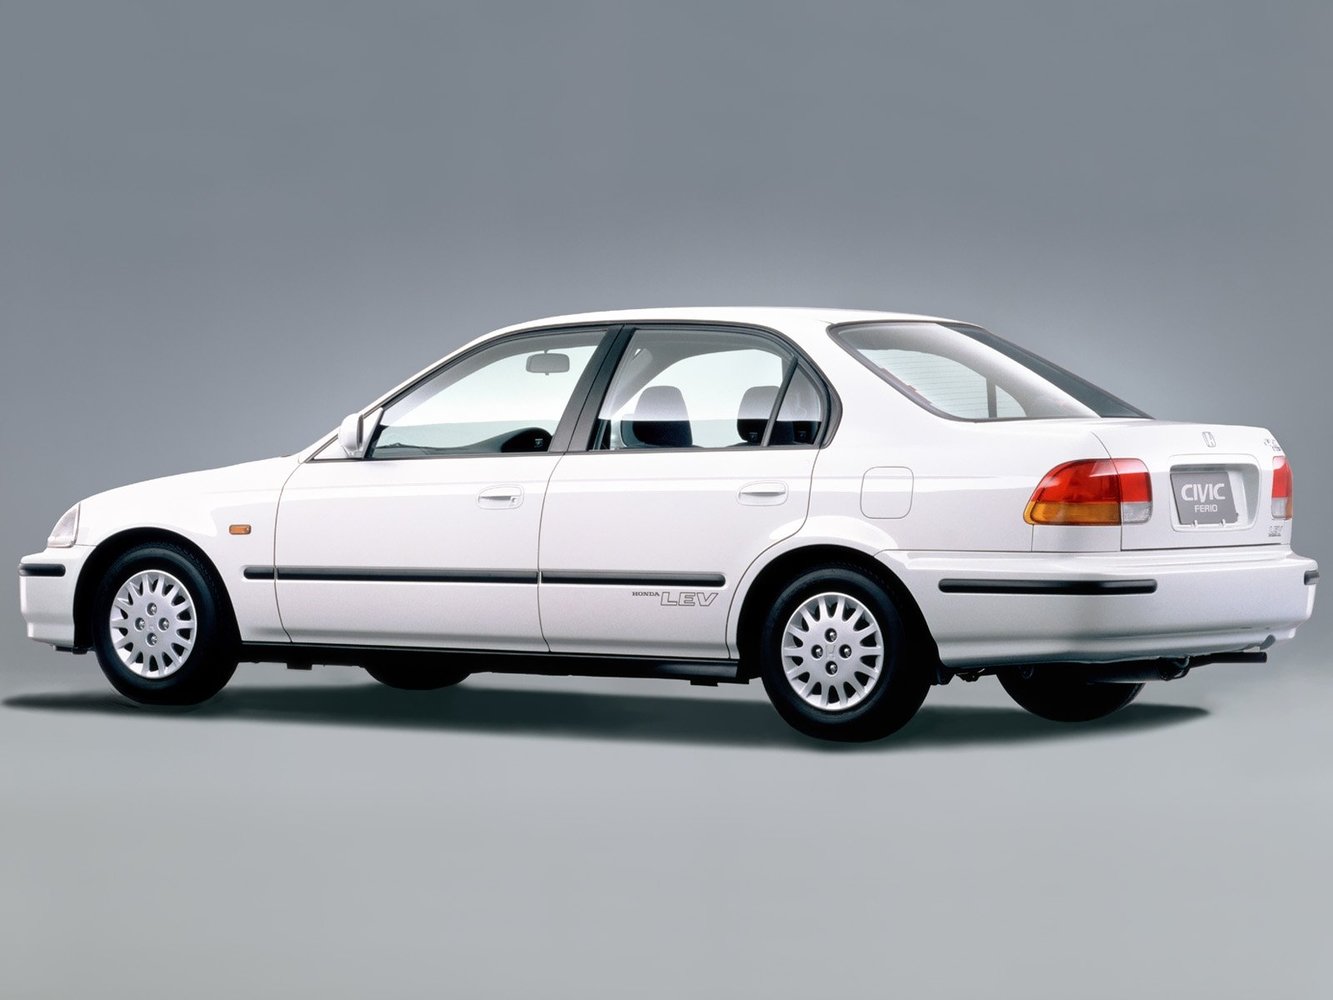 седан Honda Civic Ferio 1995 - 2000г выпуска модификация 1.3 AT (91 л.с.)